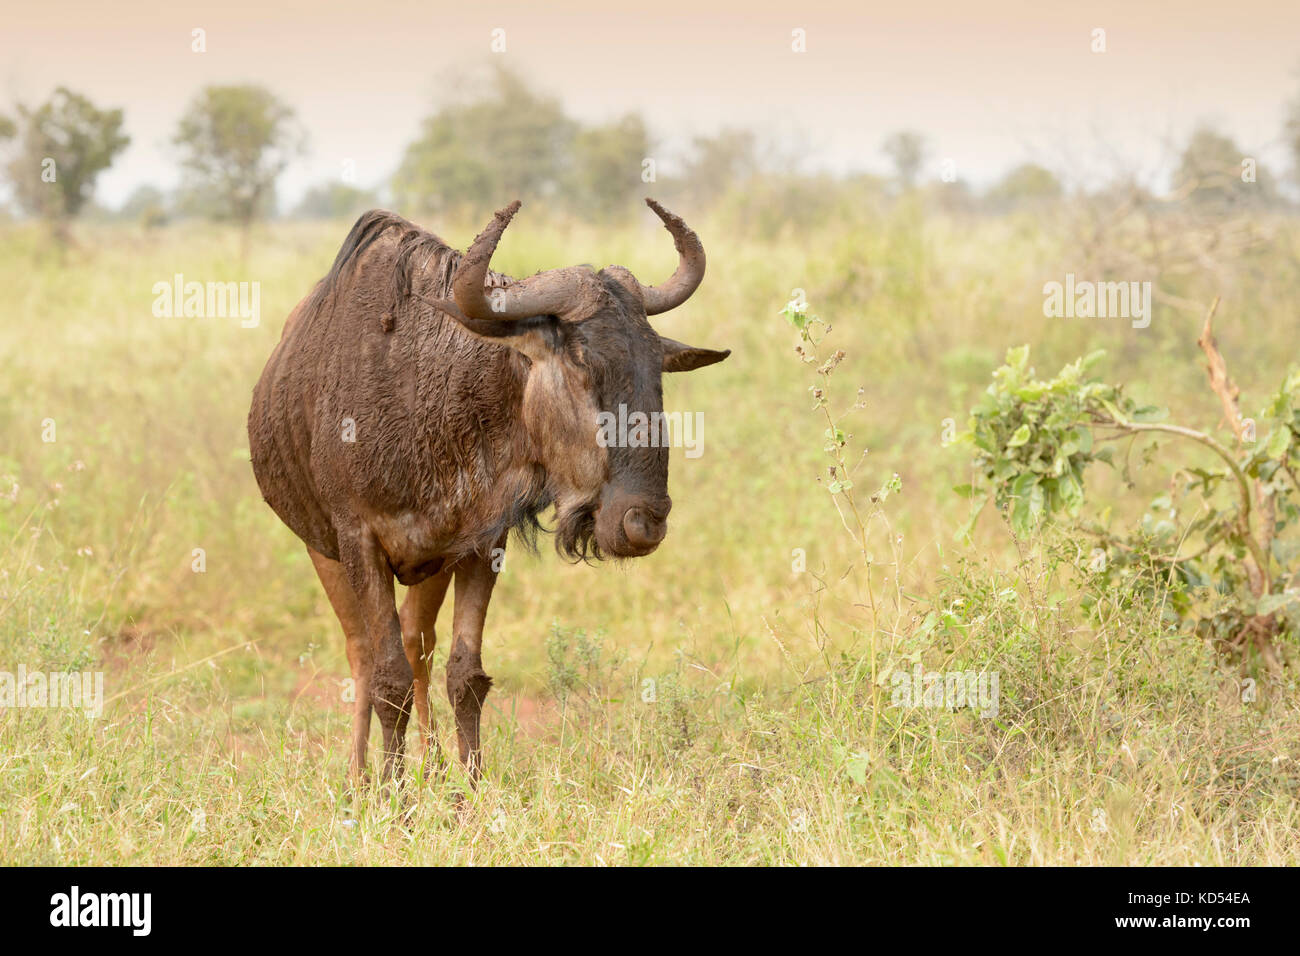 Gnu or blue wildebeest (Connochaetes taurinus) standing on grassland, Kruger National Park, Mpumalanga, South Africa Stock Photo